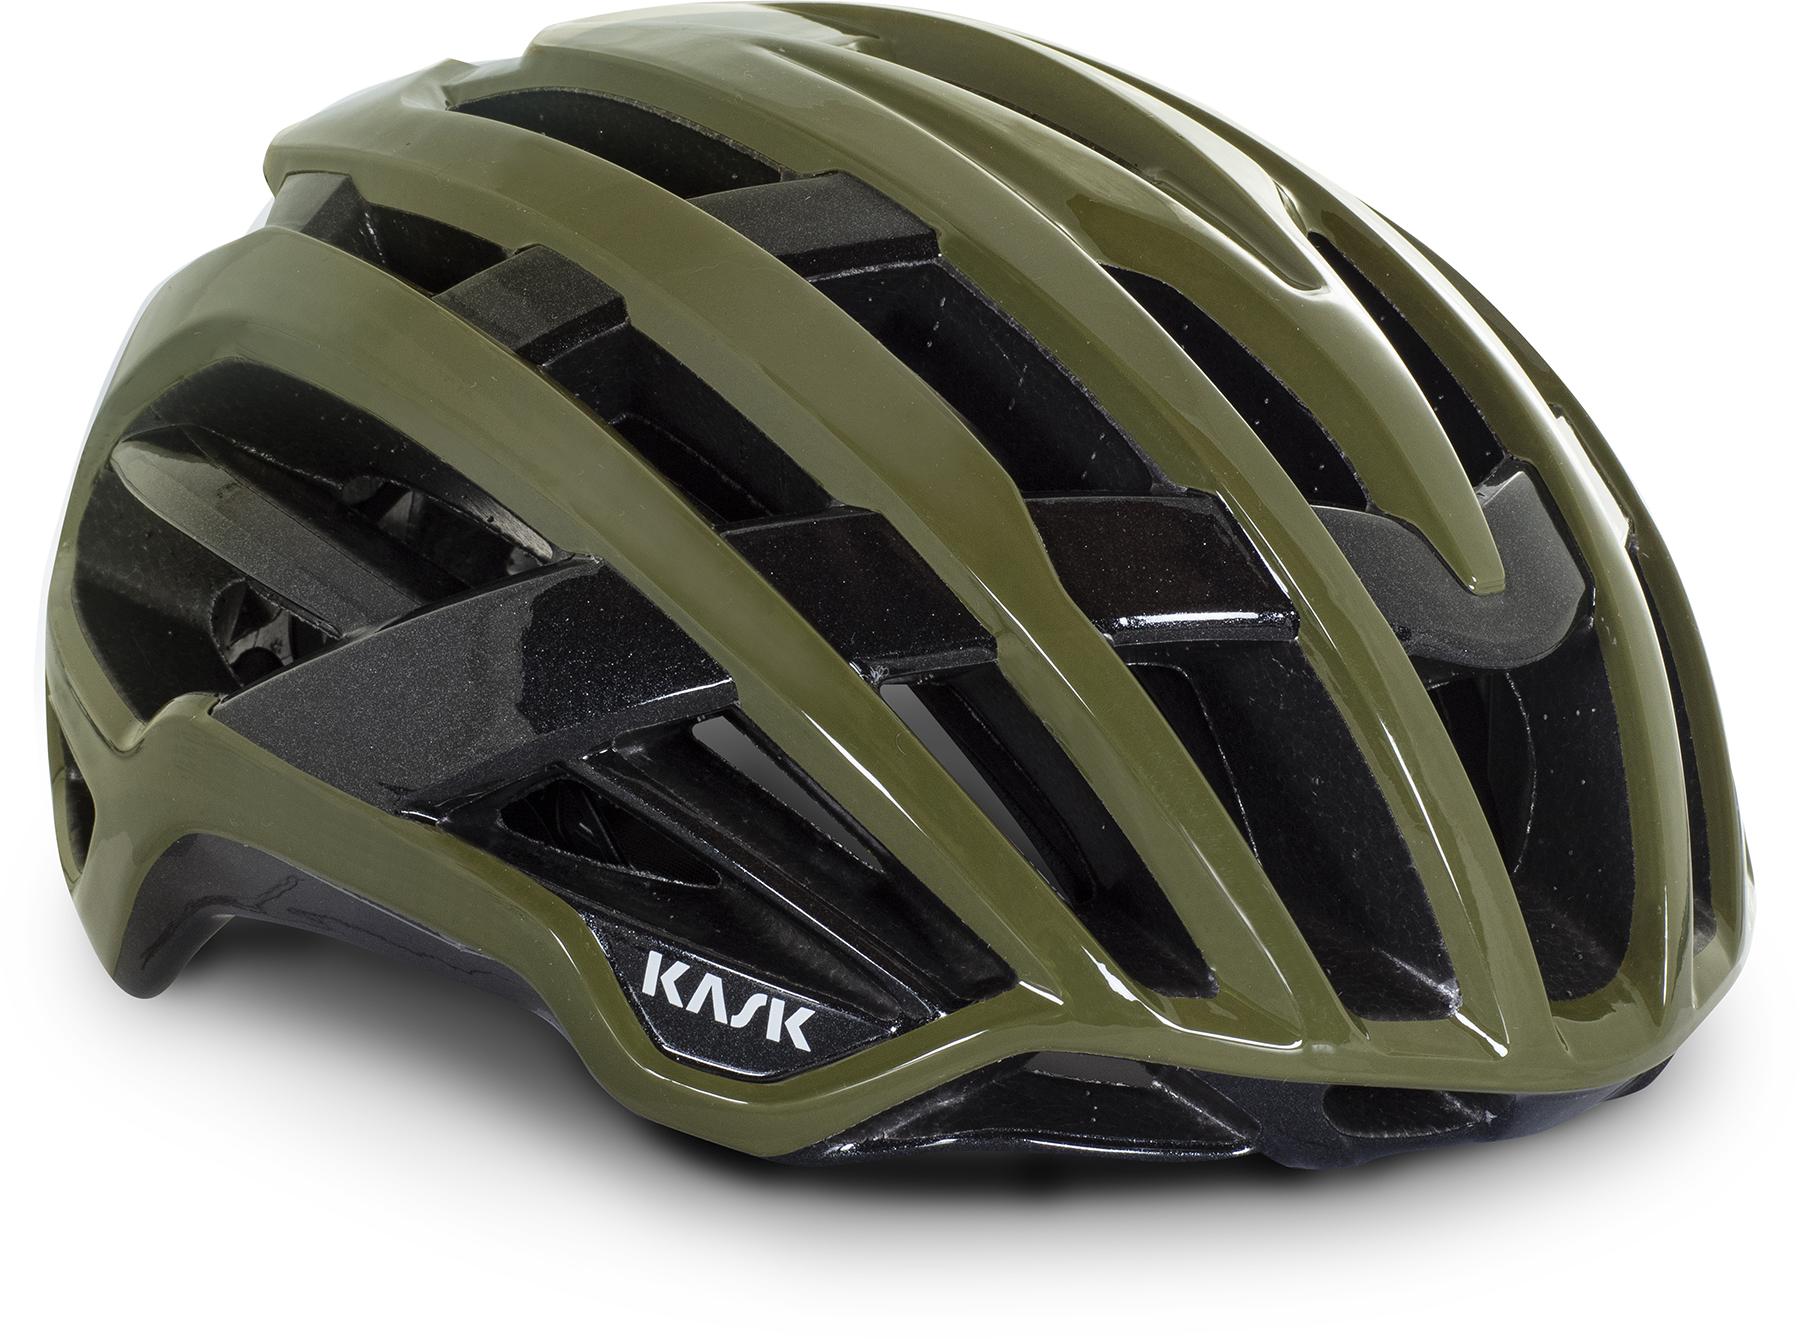 Kask Valegro Road Cycling Helmet (wg11) - Olive Green